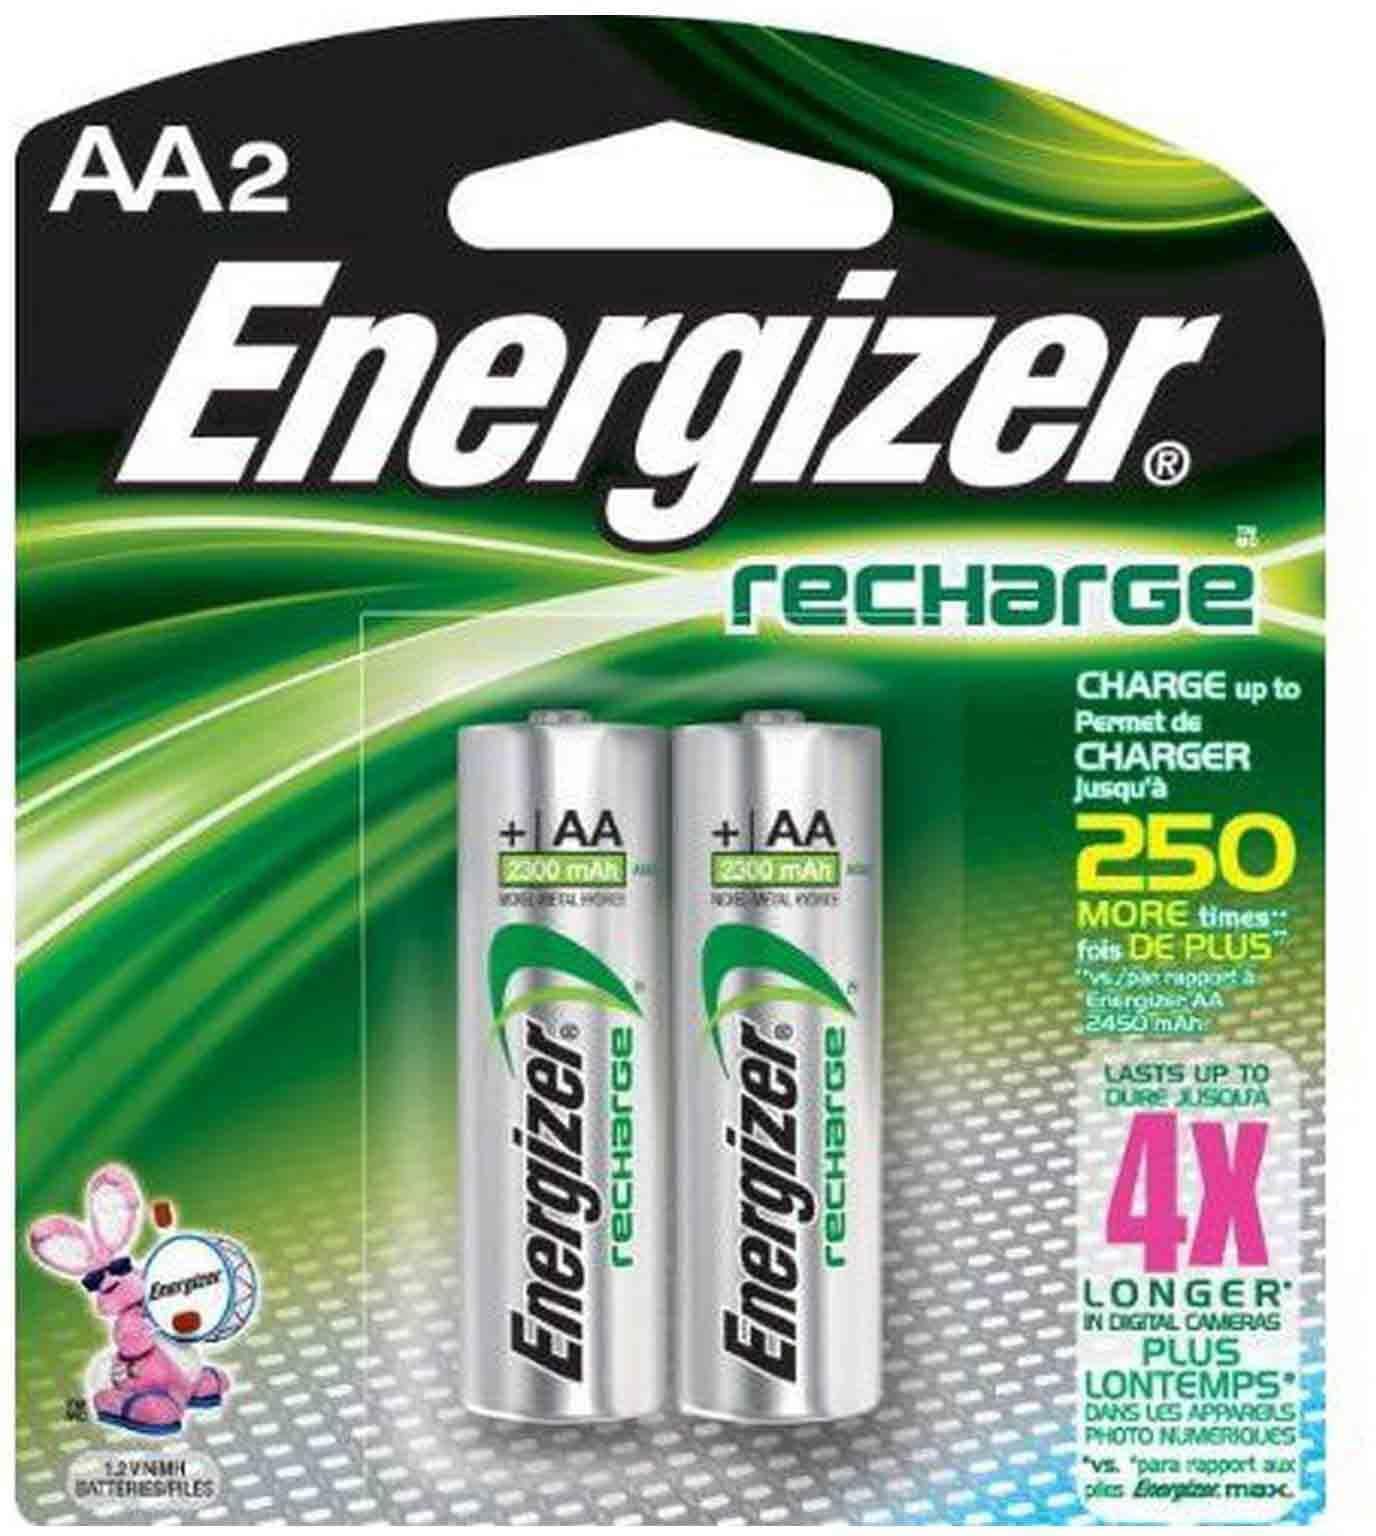 Energizer Rechargeable AA Batteries, 2300 mAh - 2 Batteries